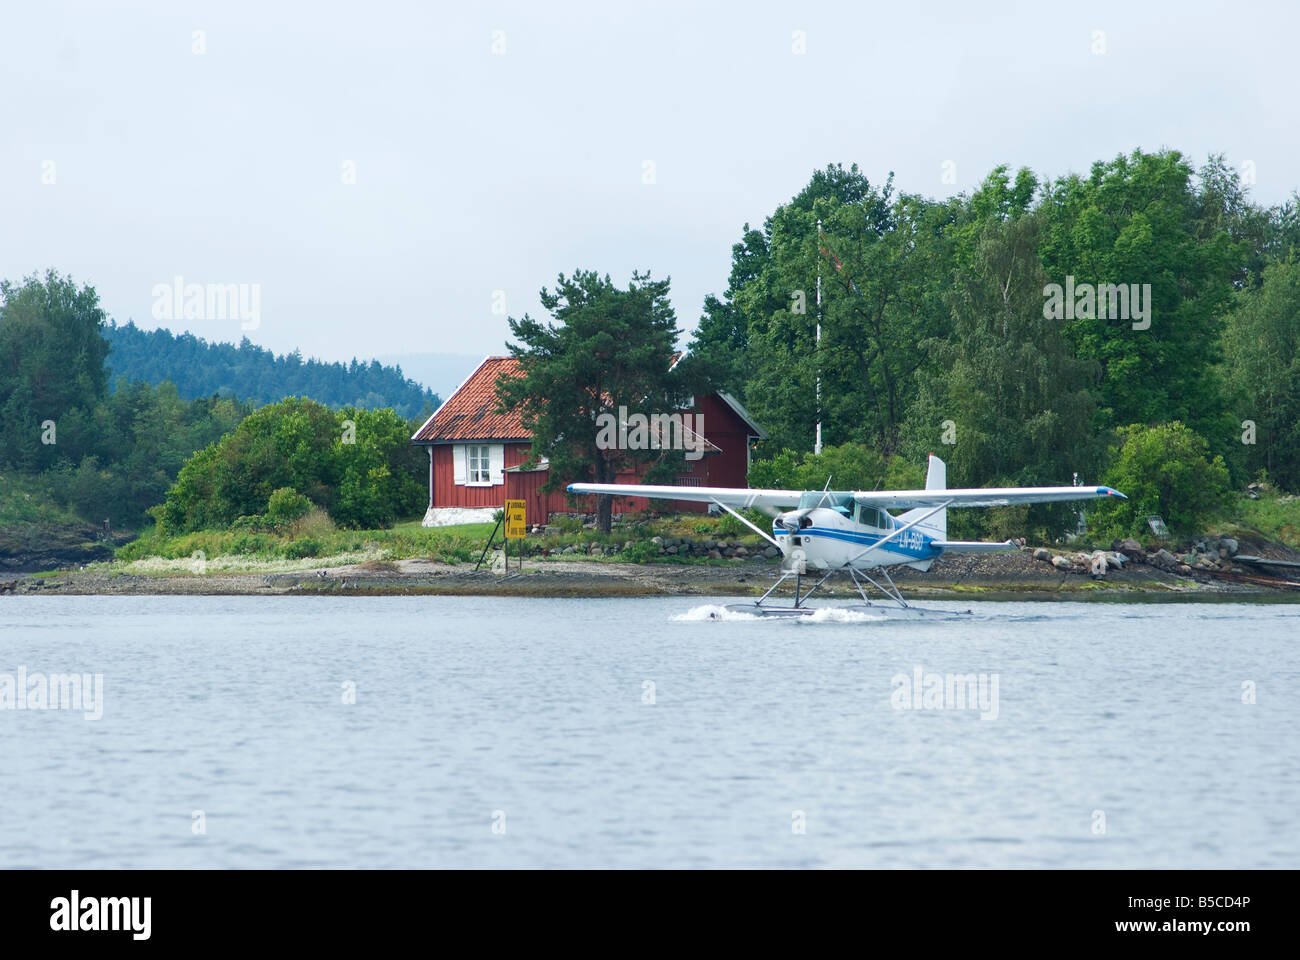 White and blue Cessna Skywagon 185 seaplane taxxiing Stock Photo